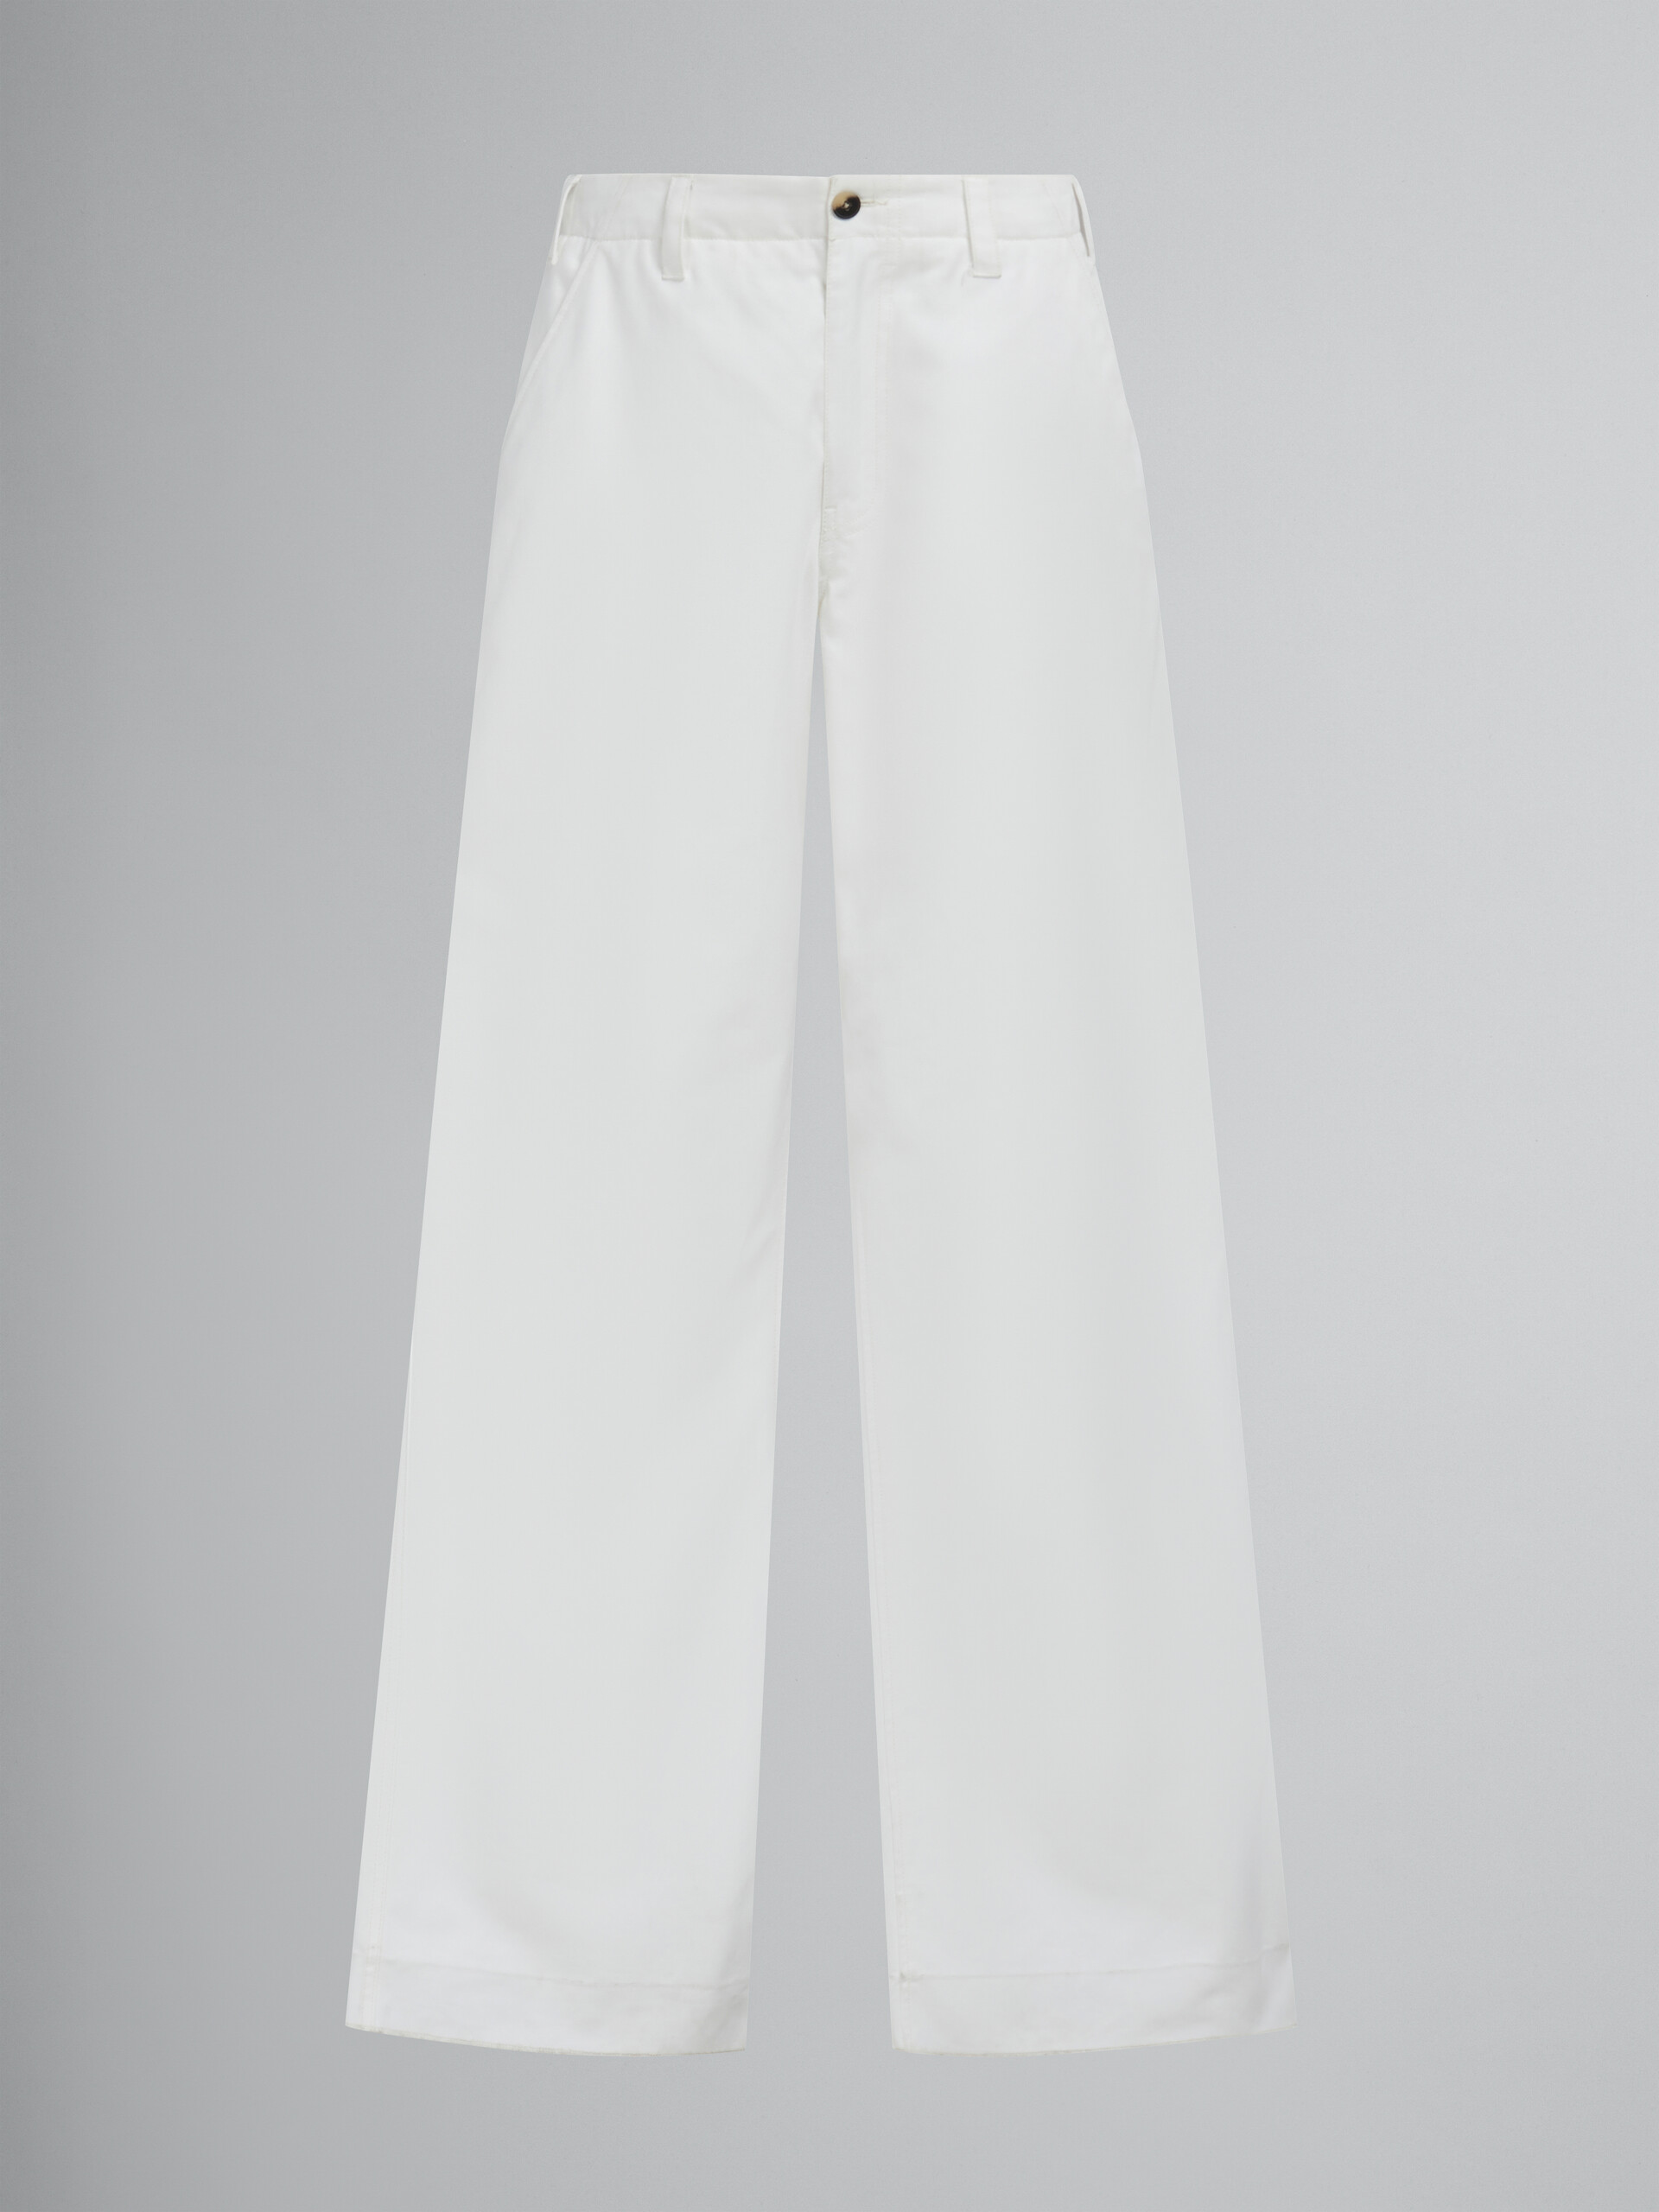 Pantaloni svasati in cotone biologico bianco - Pantaloni - Image 1